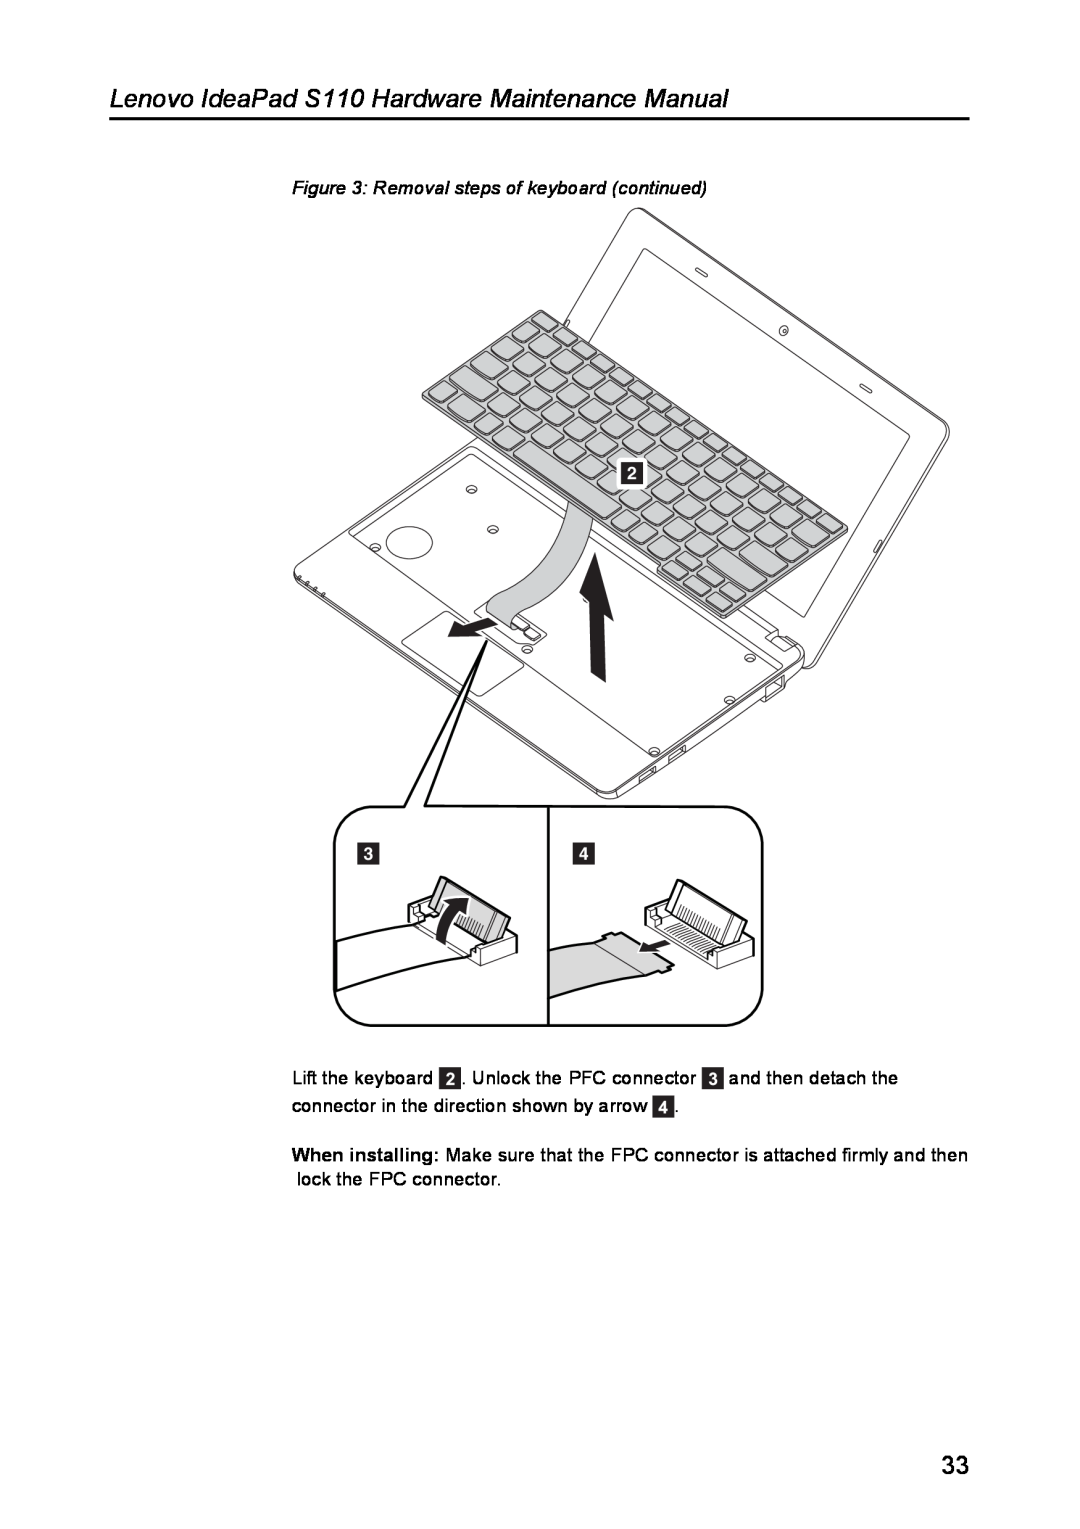 Lenovo manual Removal steps of keyboard continued, Lenovo IdeaPad S110 Hardware Maintenance Manual 